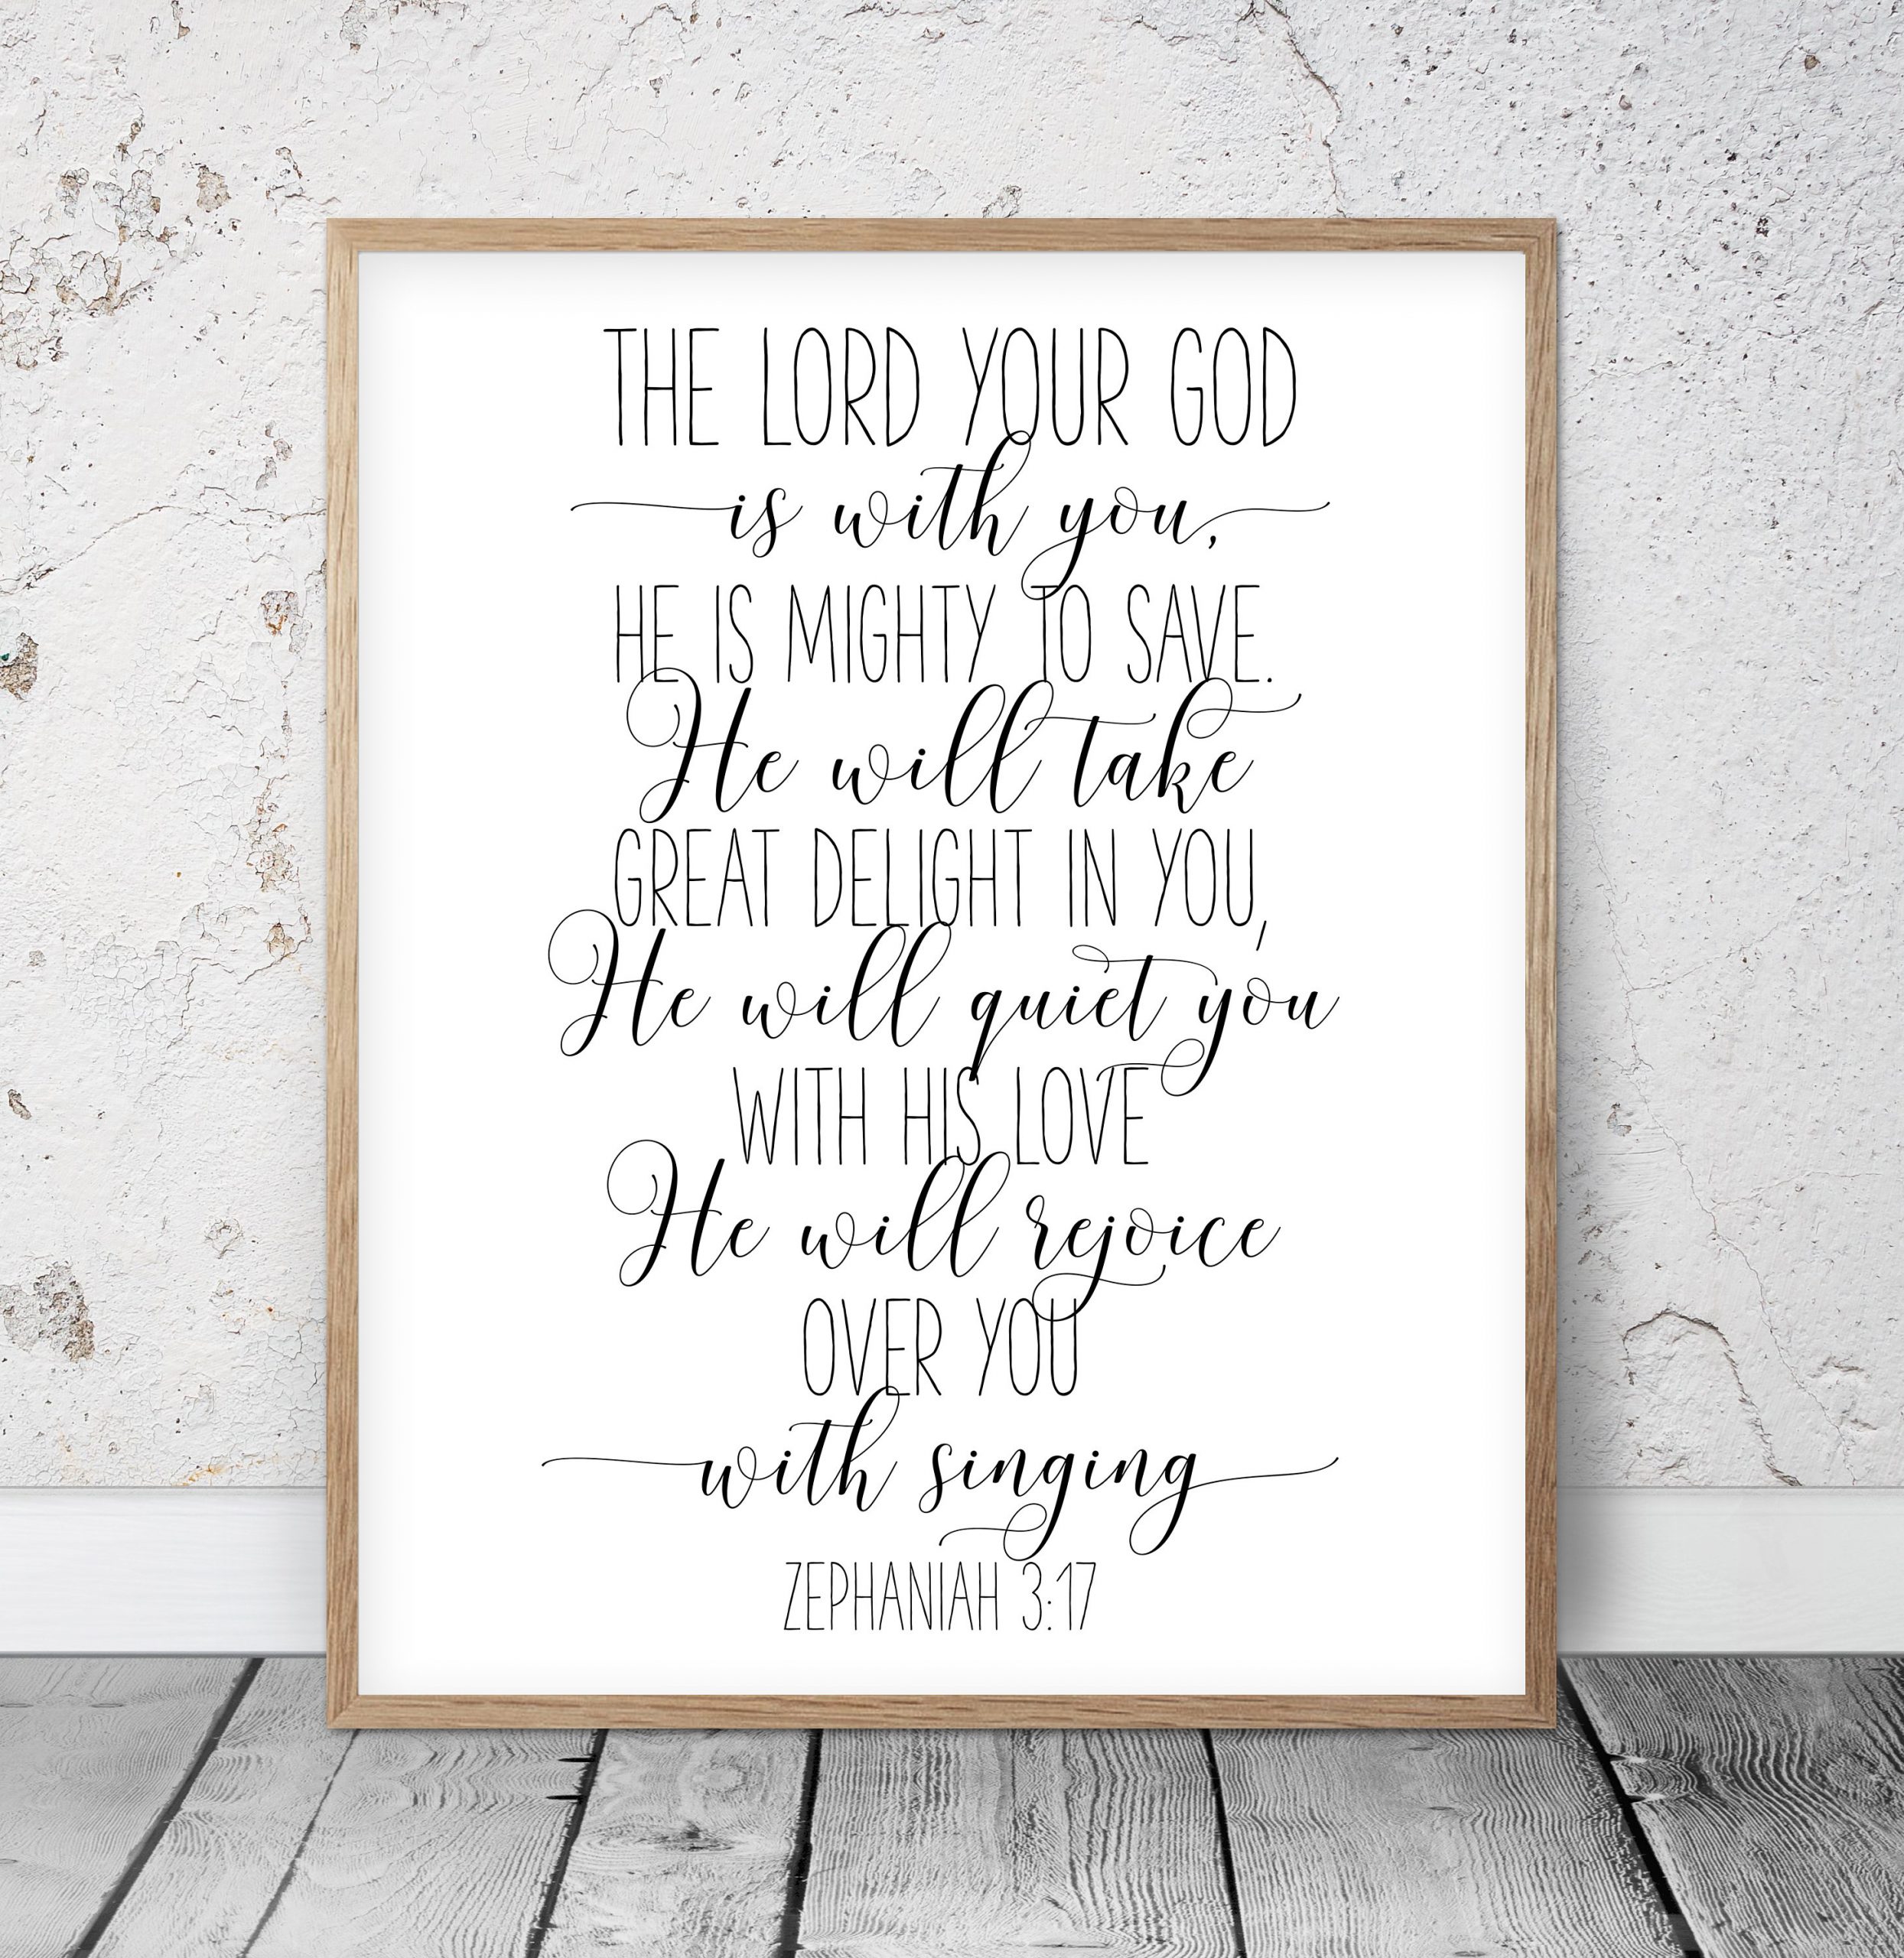 Printable Wall Art Bible Verse Zephaniah 3:17 Home Decor Download Digital Image 